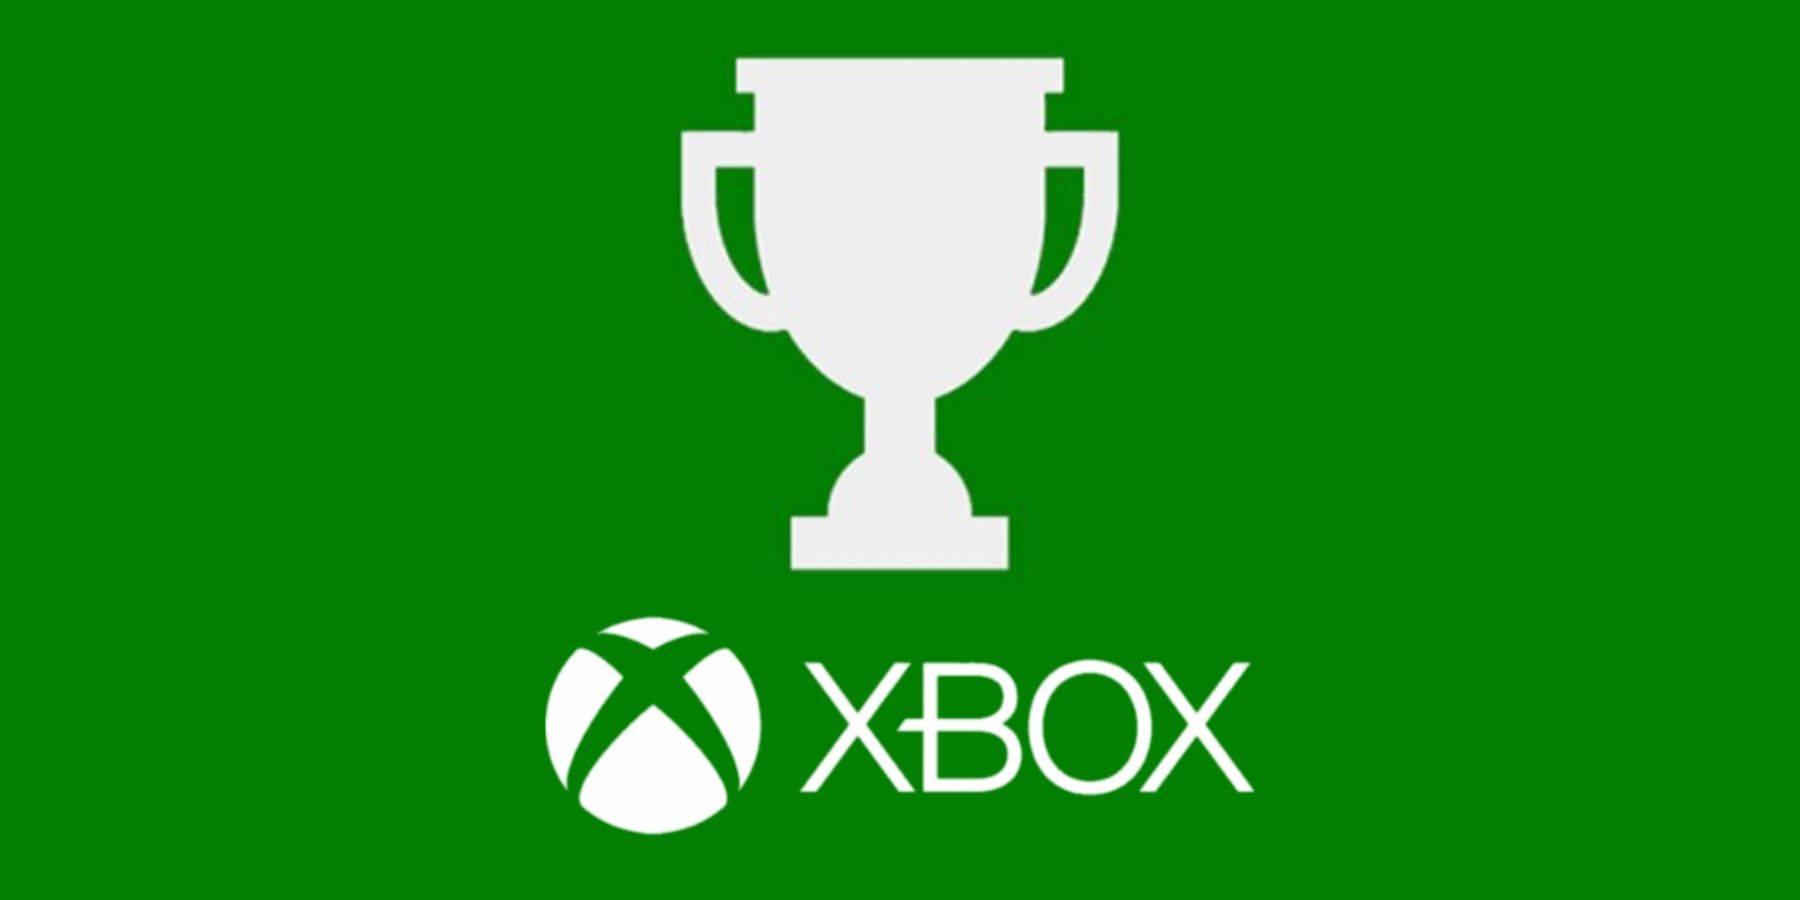 xbox-logo-achievement-trophy-green-background